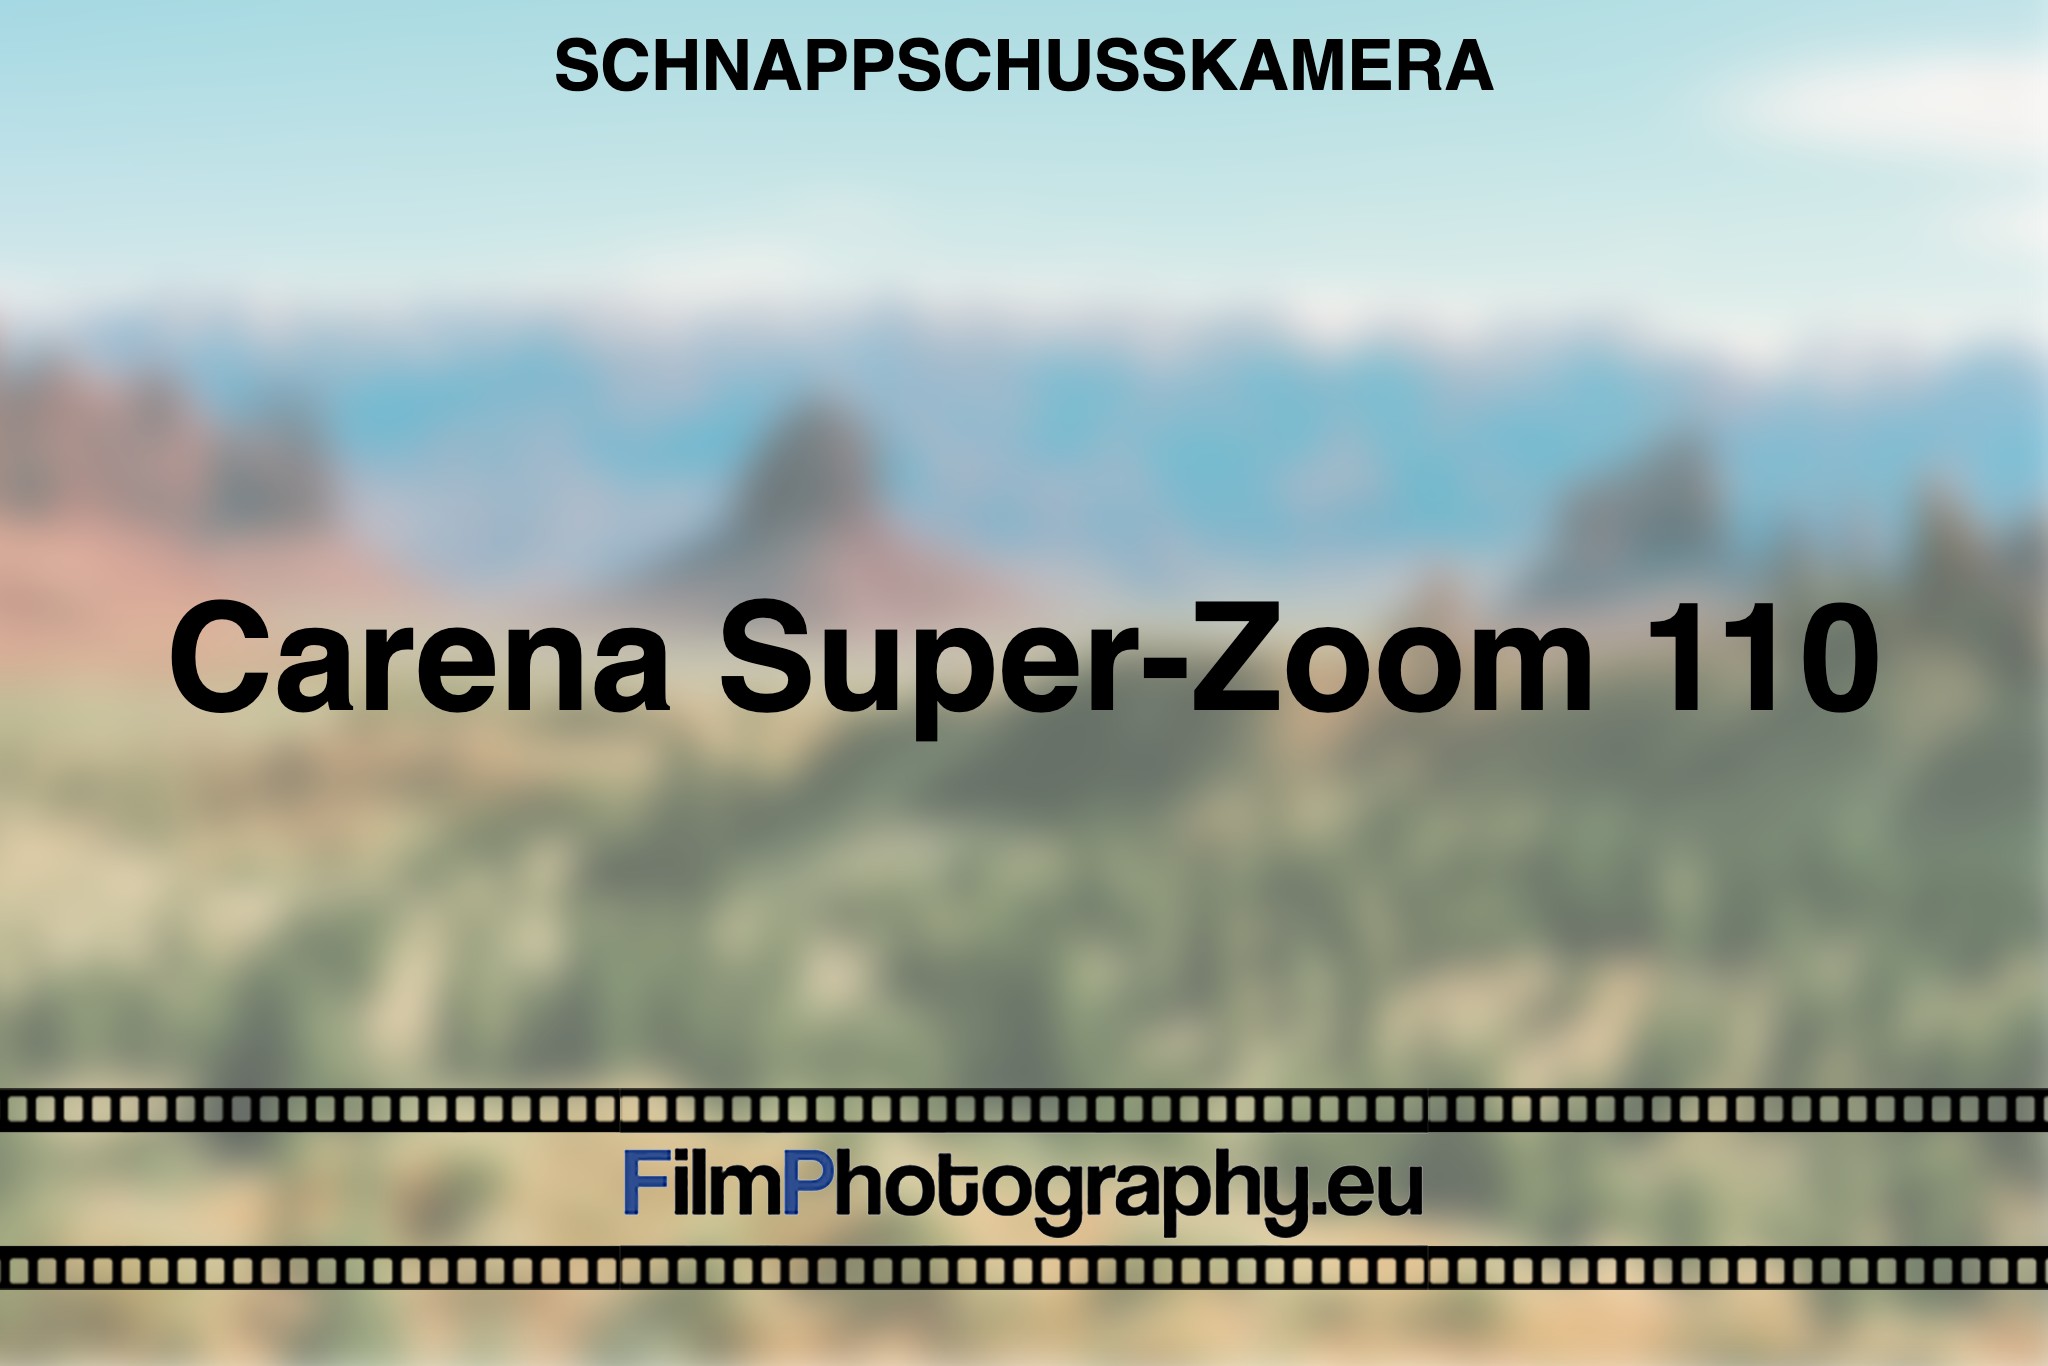 carena-super-zoom-110-schnappschusskamera-bnv